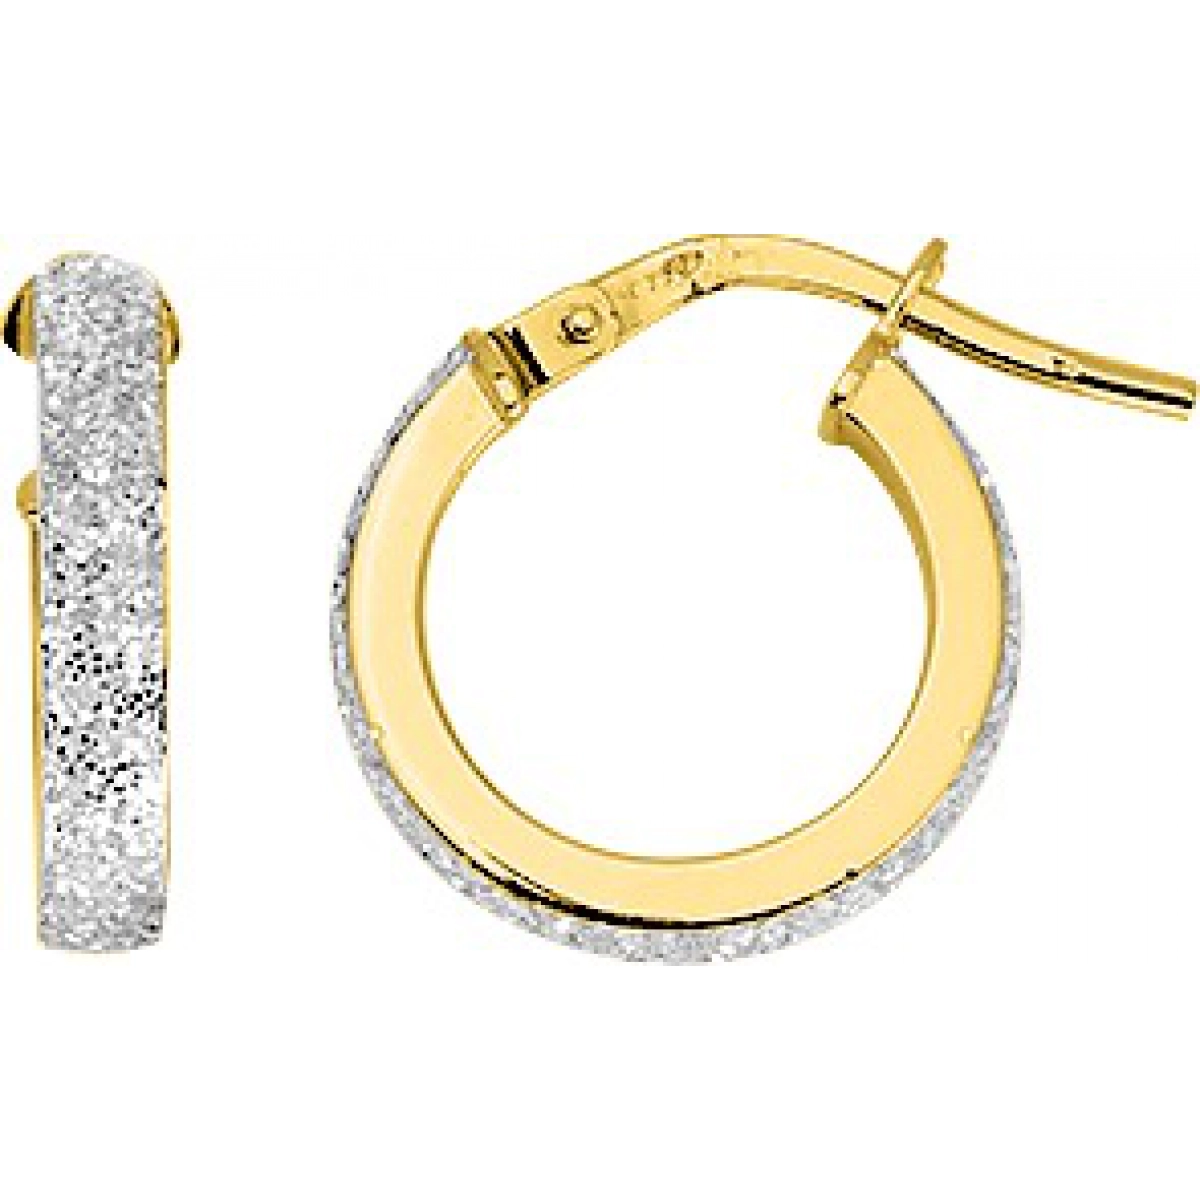 Hoops earrings pair w. rhod and glitter 18K YG  Lua Blanca  3686G.0